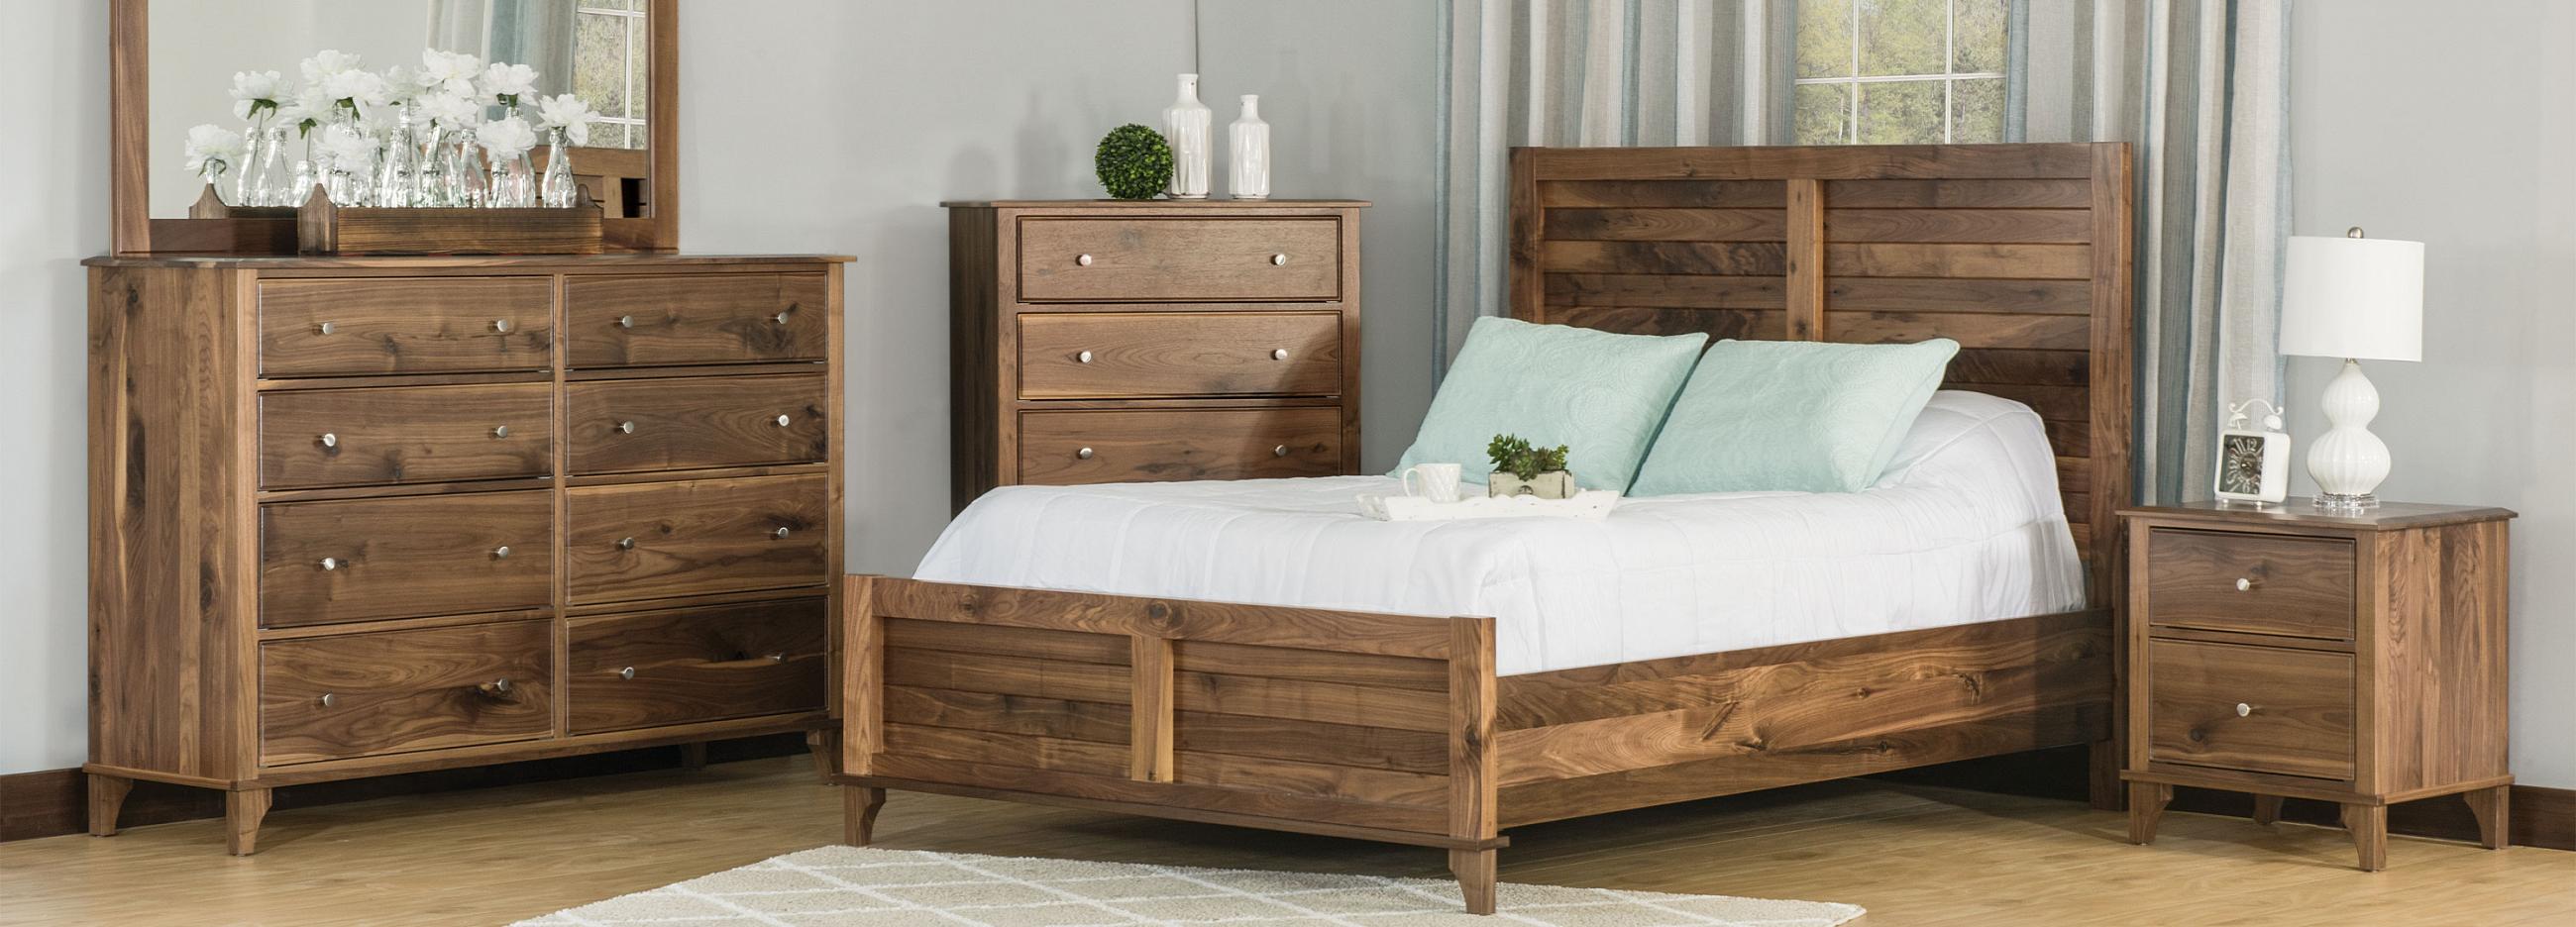 Yoders Woodworking Bedroom Furniture